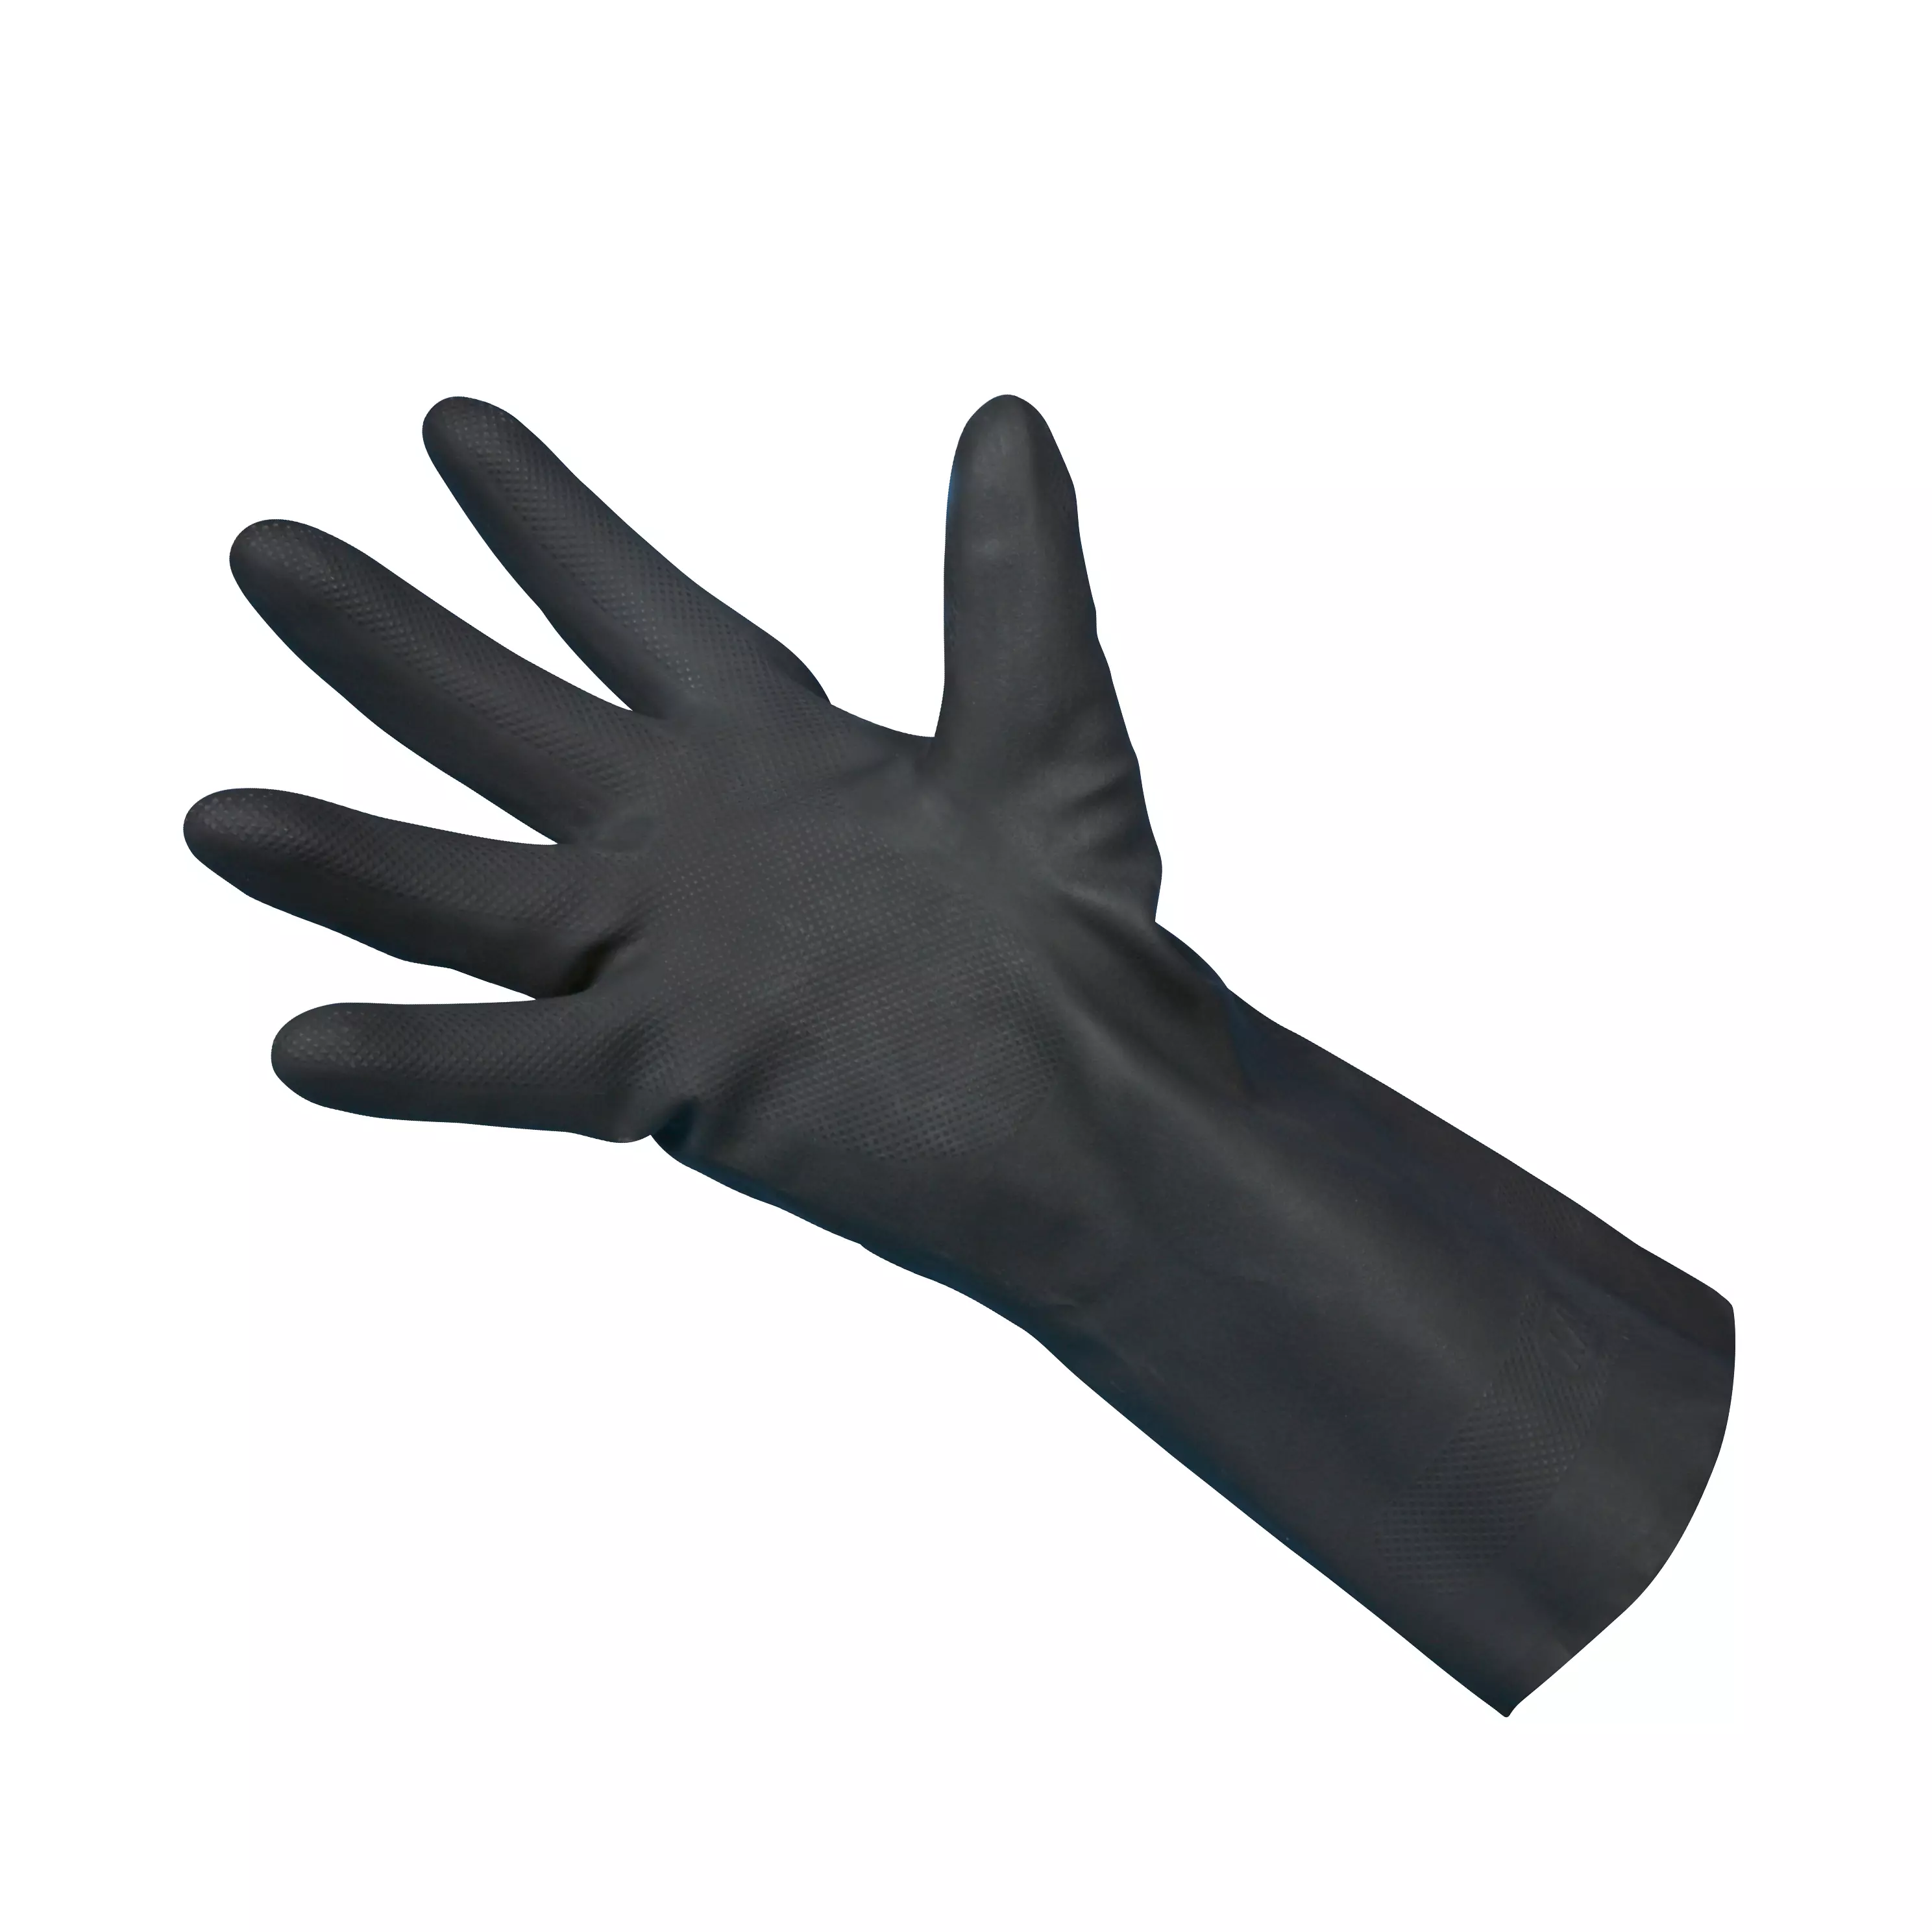 Chemical protective glove Neoprene 30, 12 pairs - Black, 8